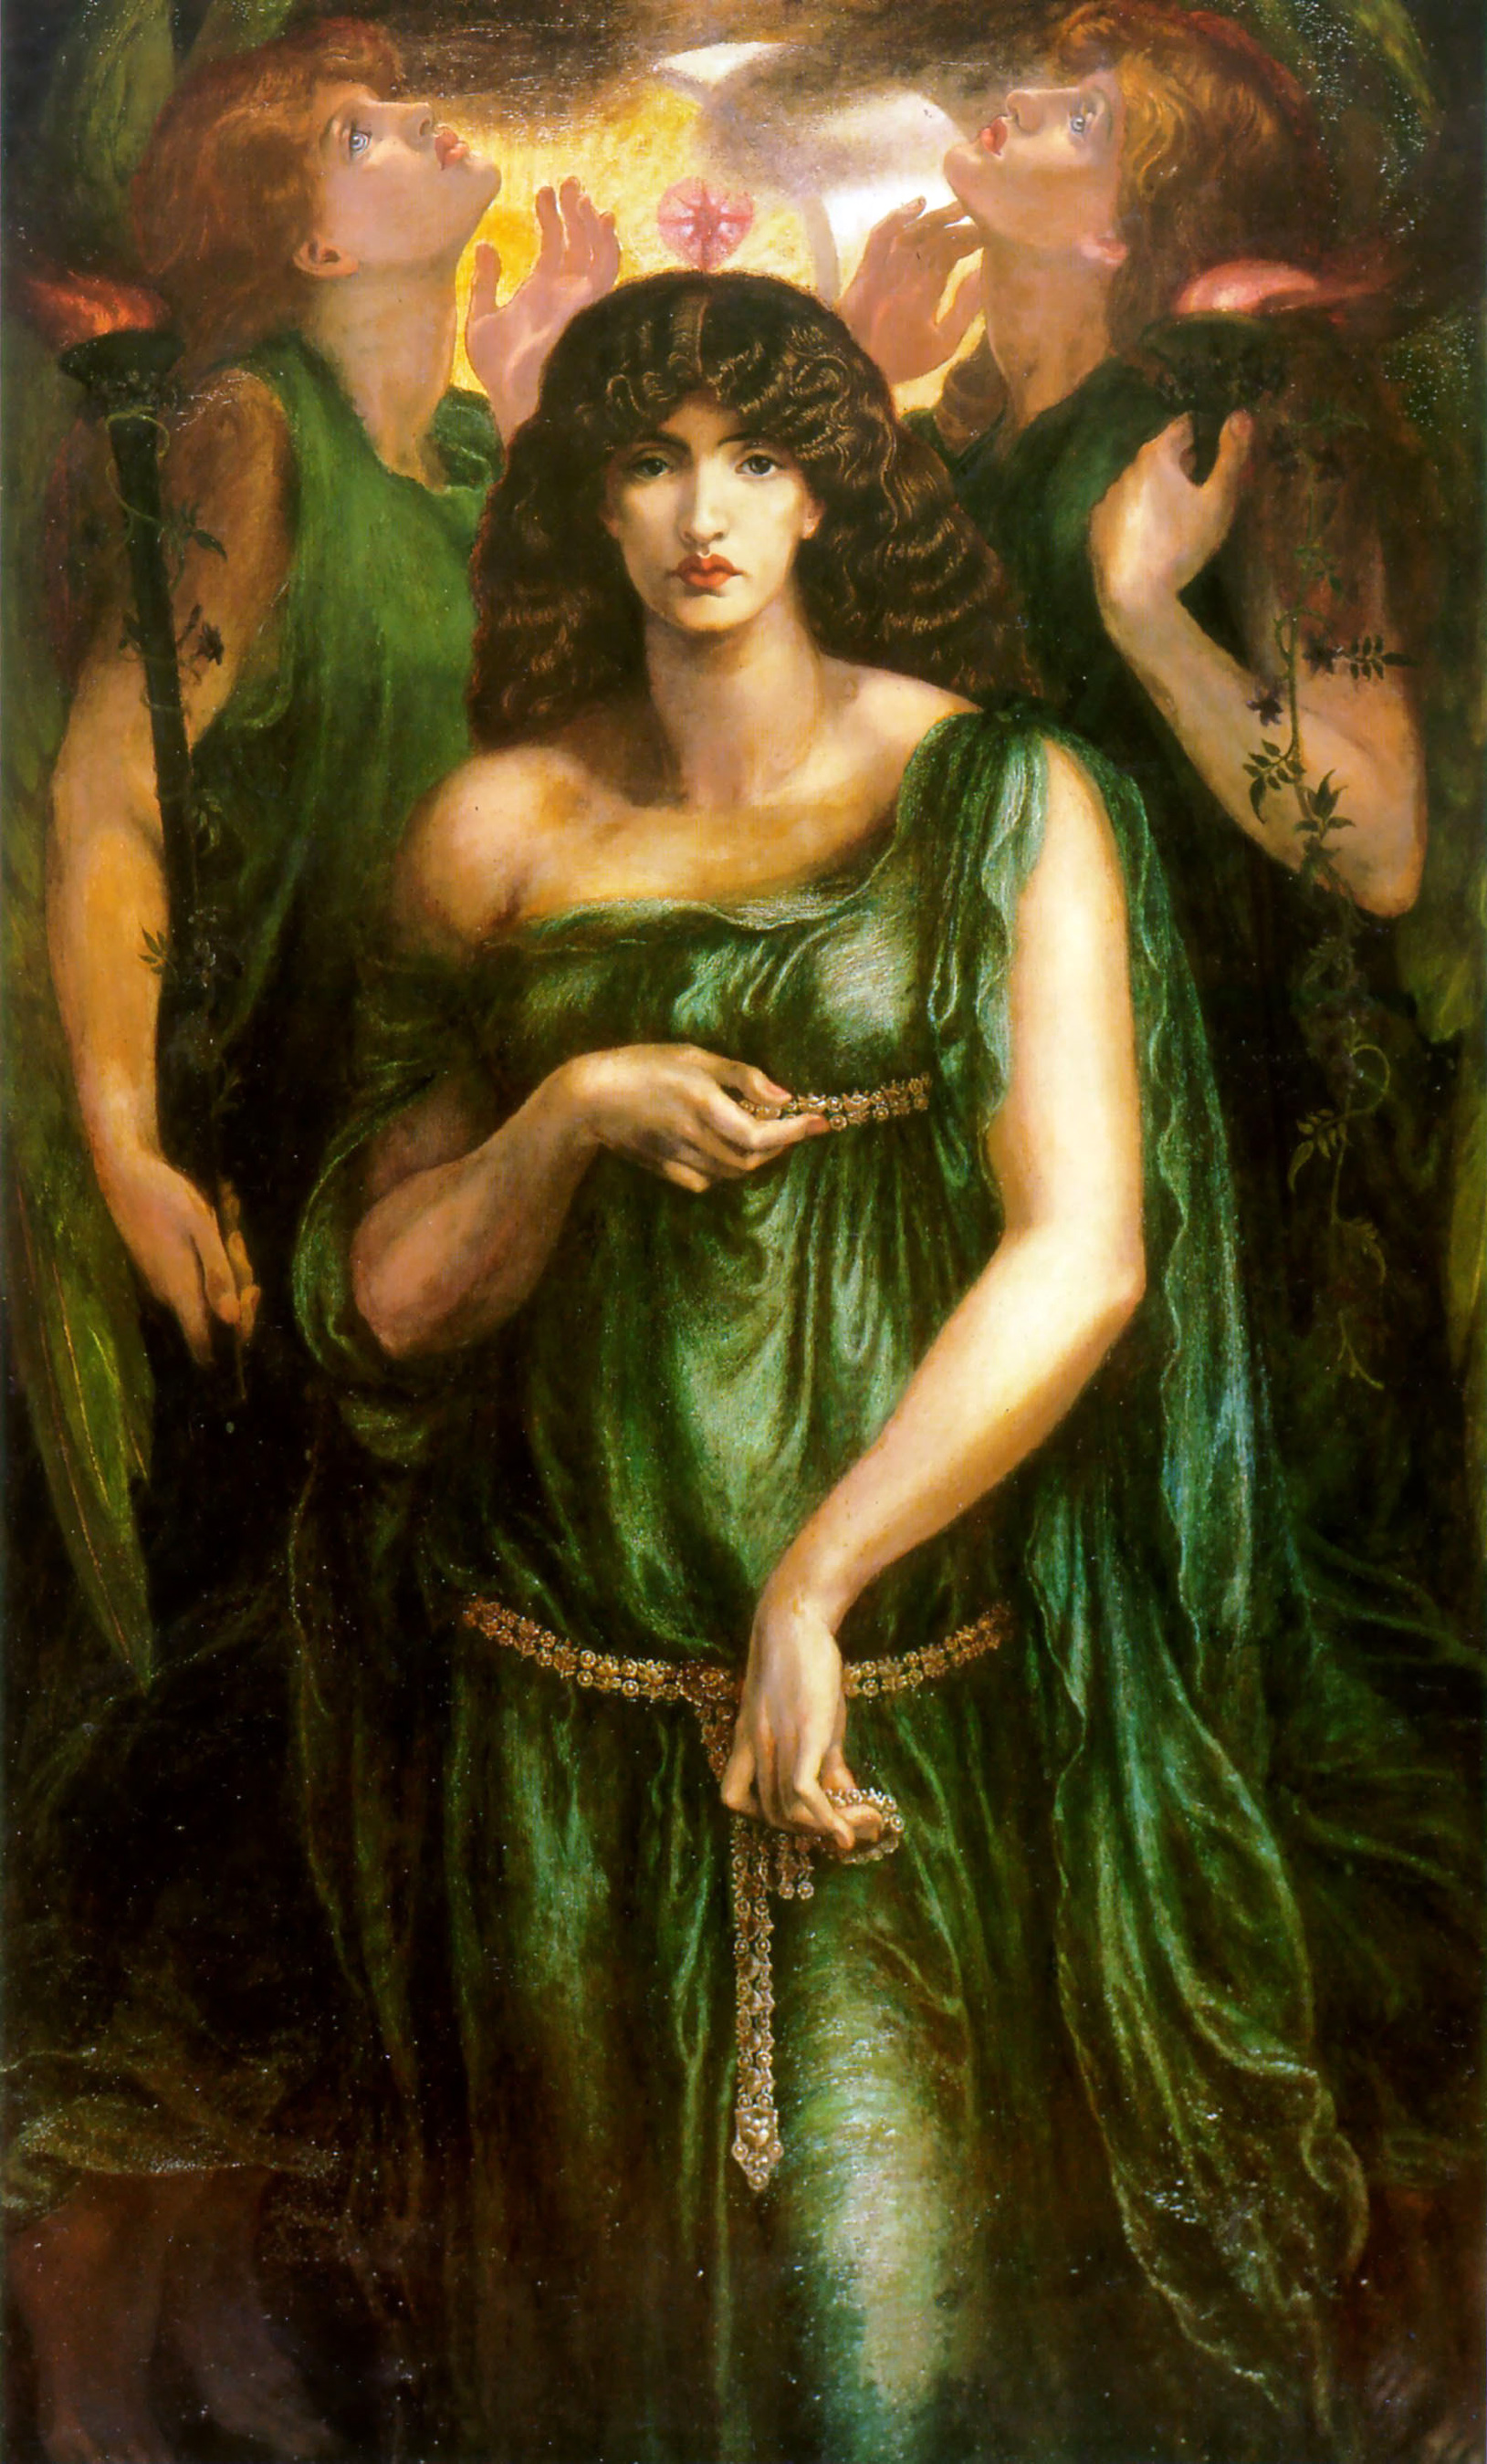 Astarte Syriaca by Dante Gabriele Rossetti - 1877 - 185 x 109 cm 